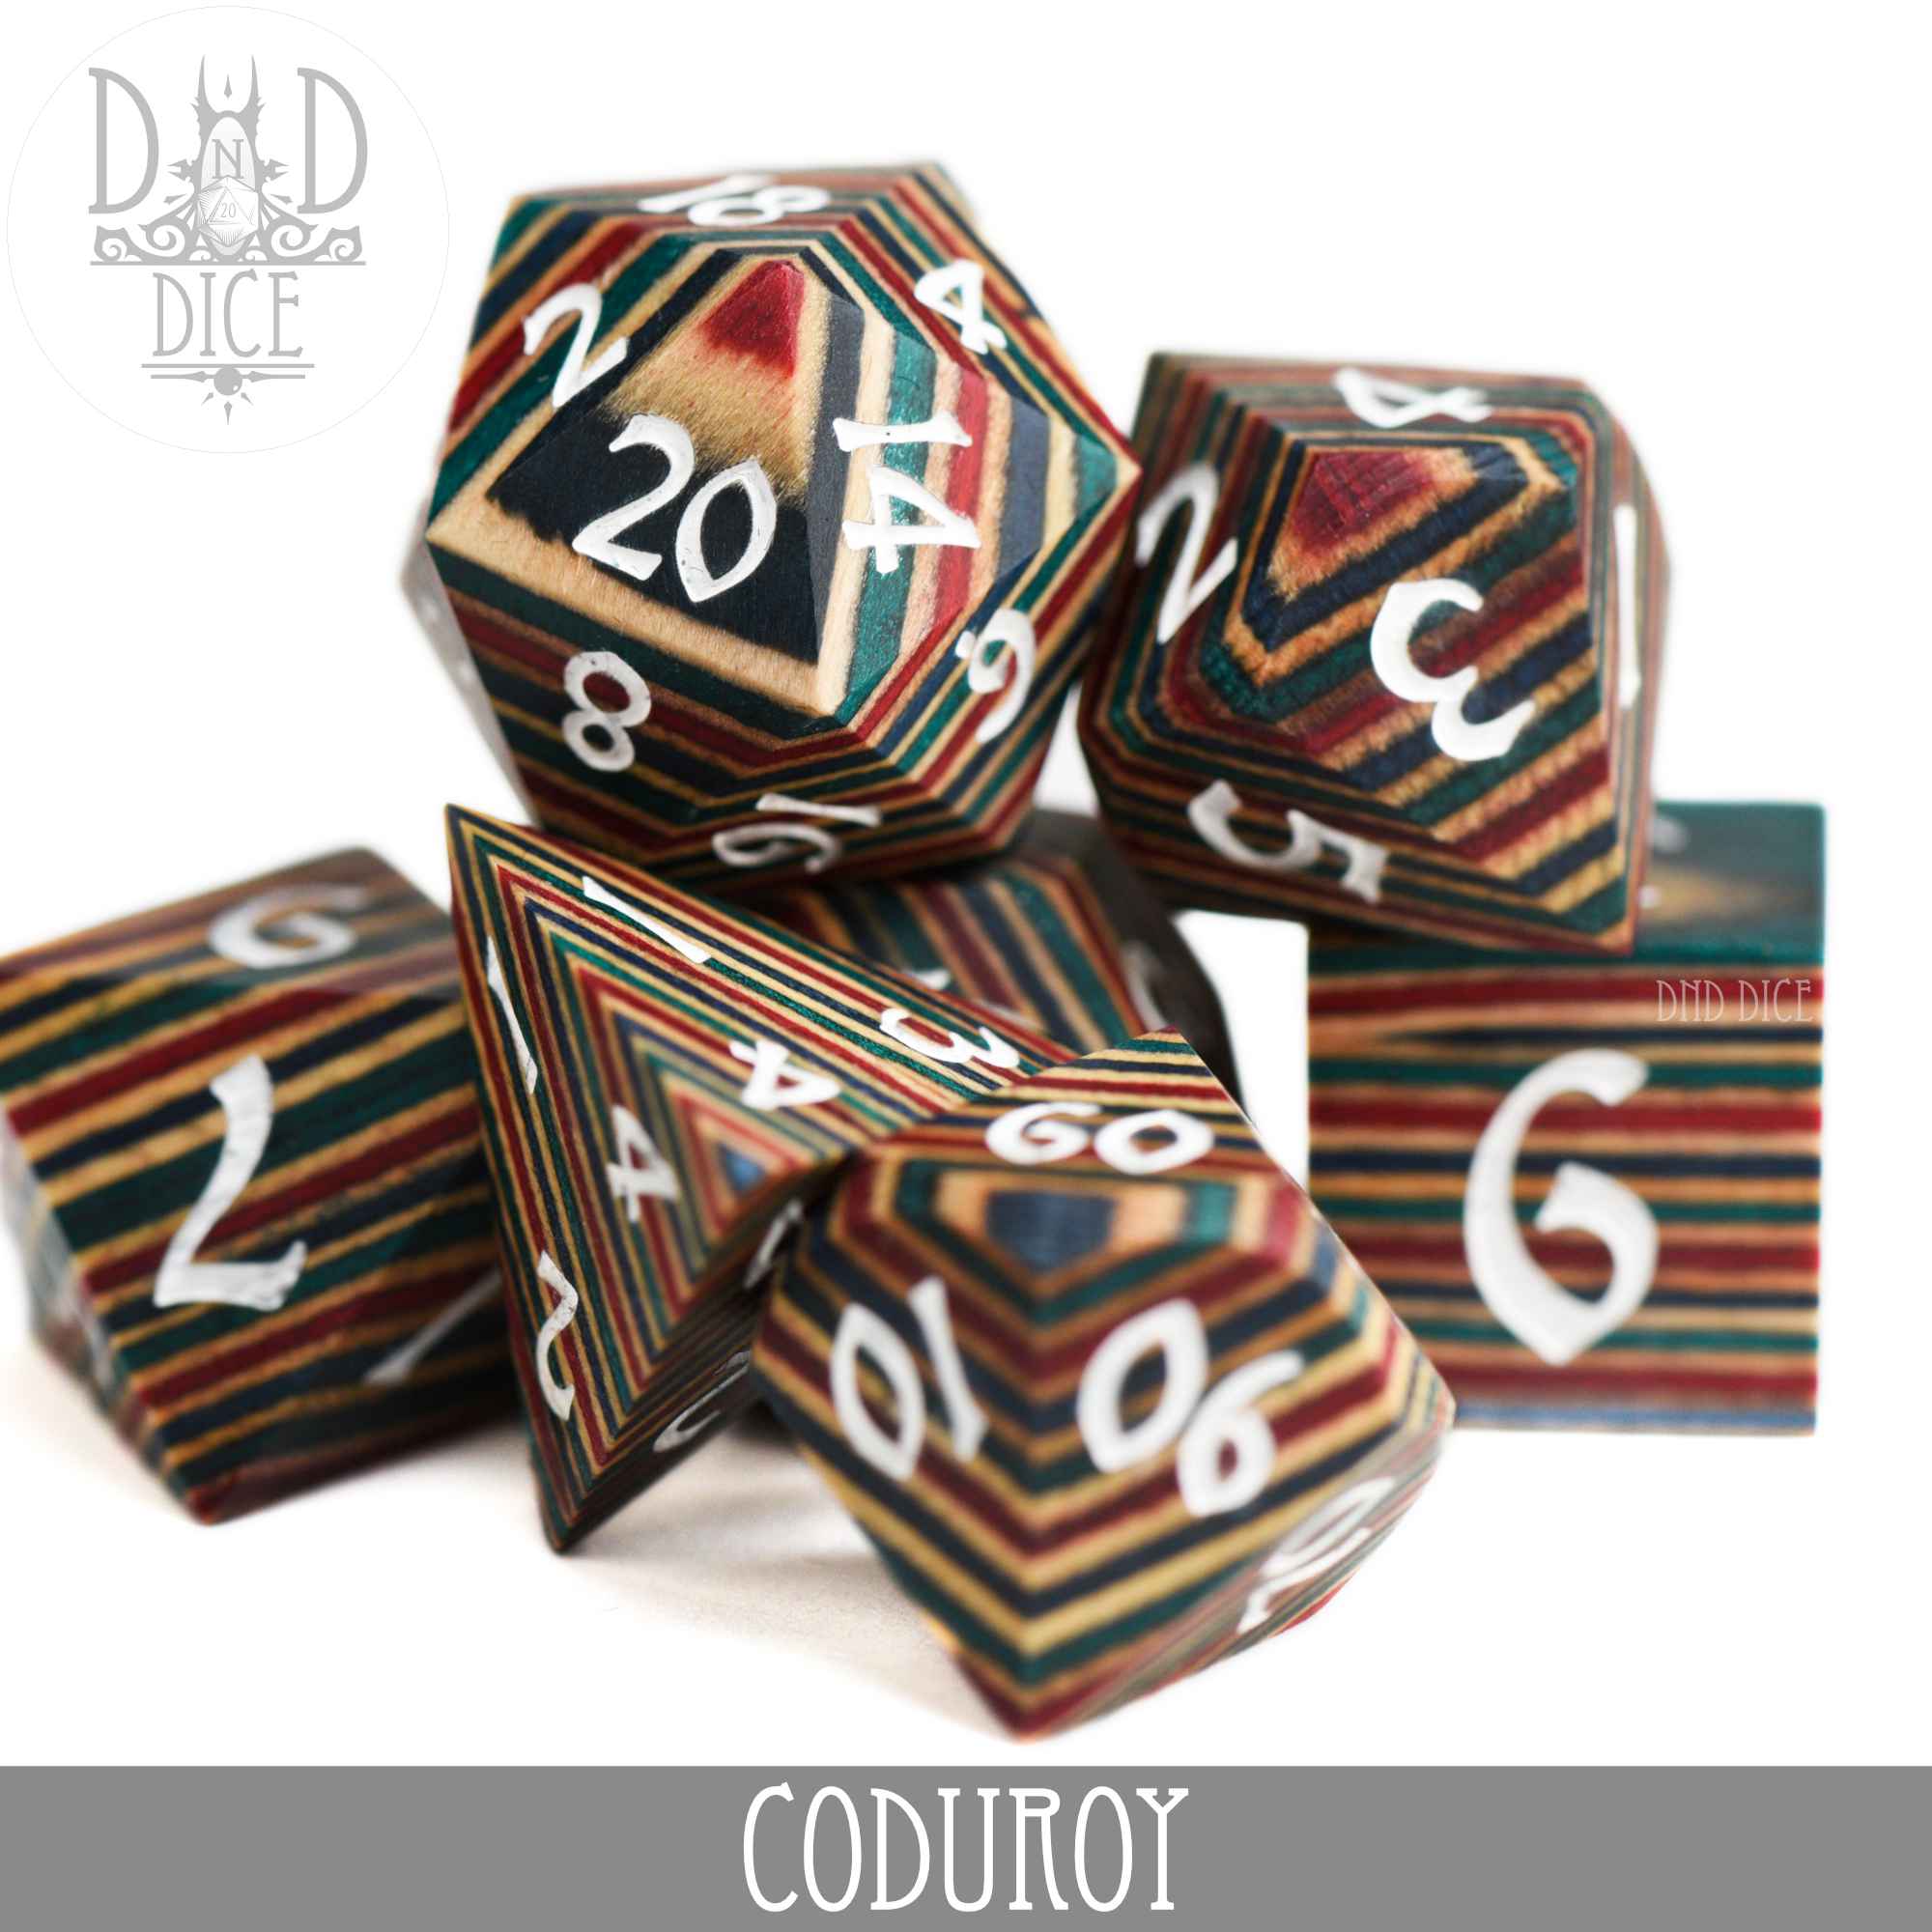 Corduroy Wood Dice Set (Gift Box)